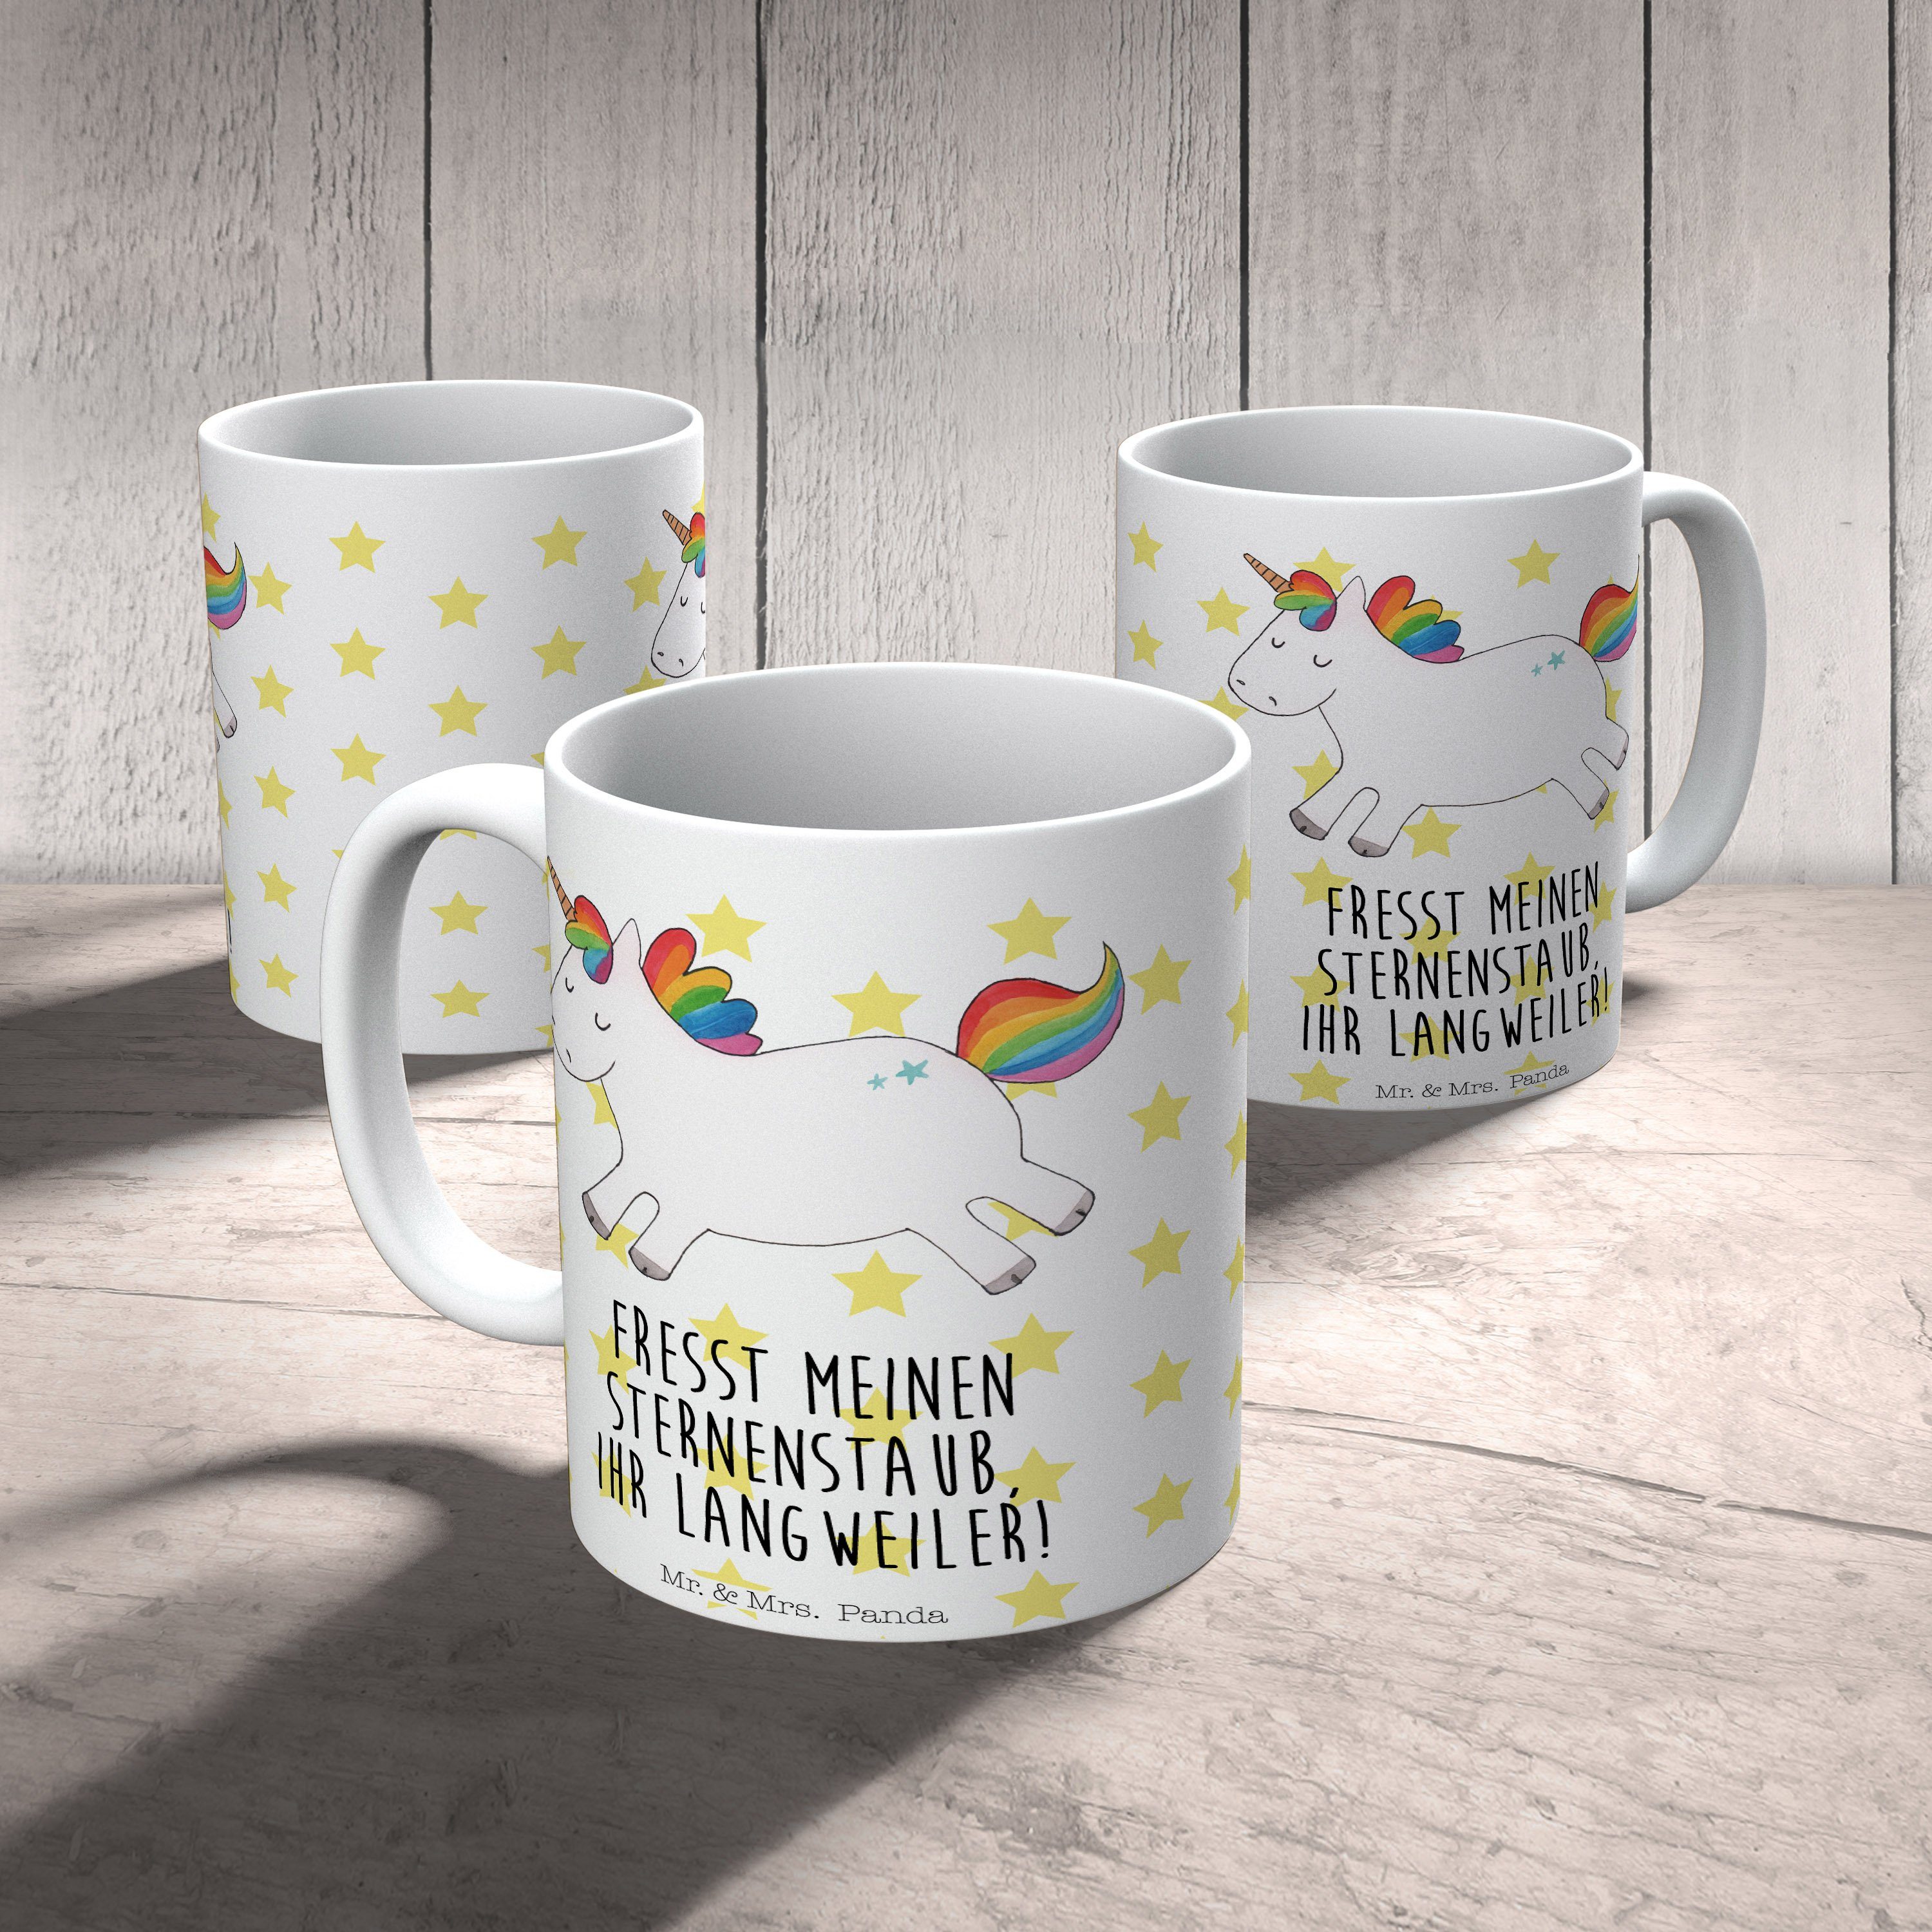 Mr. & Mrs. Panda - Keramik Geschenk, Mariella Büro Porzellantasse, Tasse Tas, Teetasse, Kaffeebecher